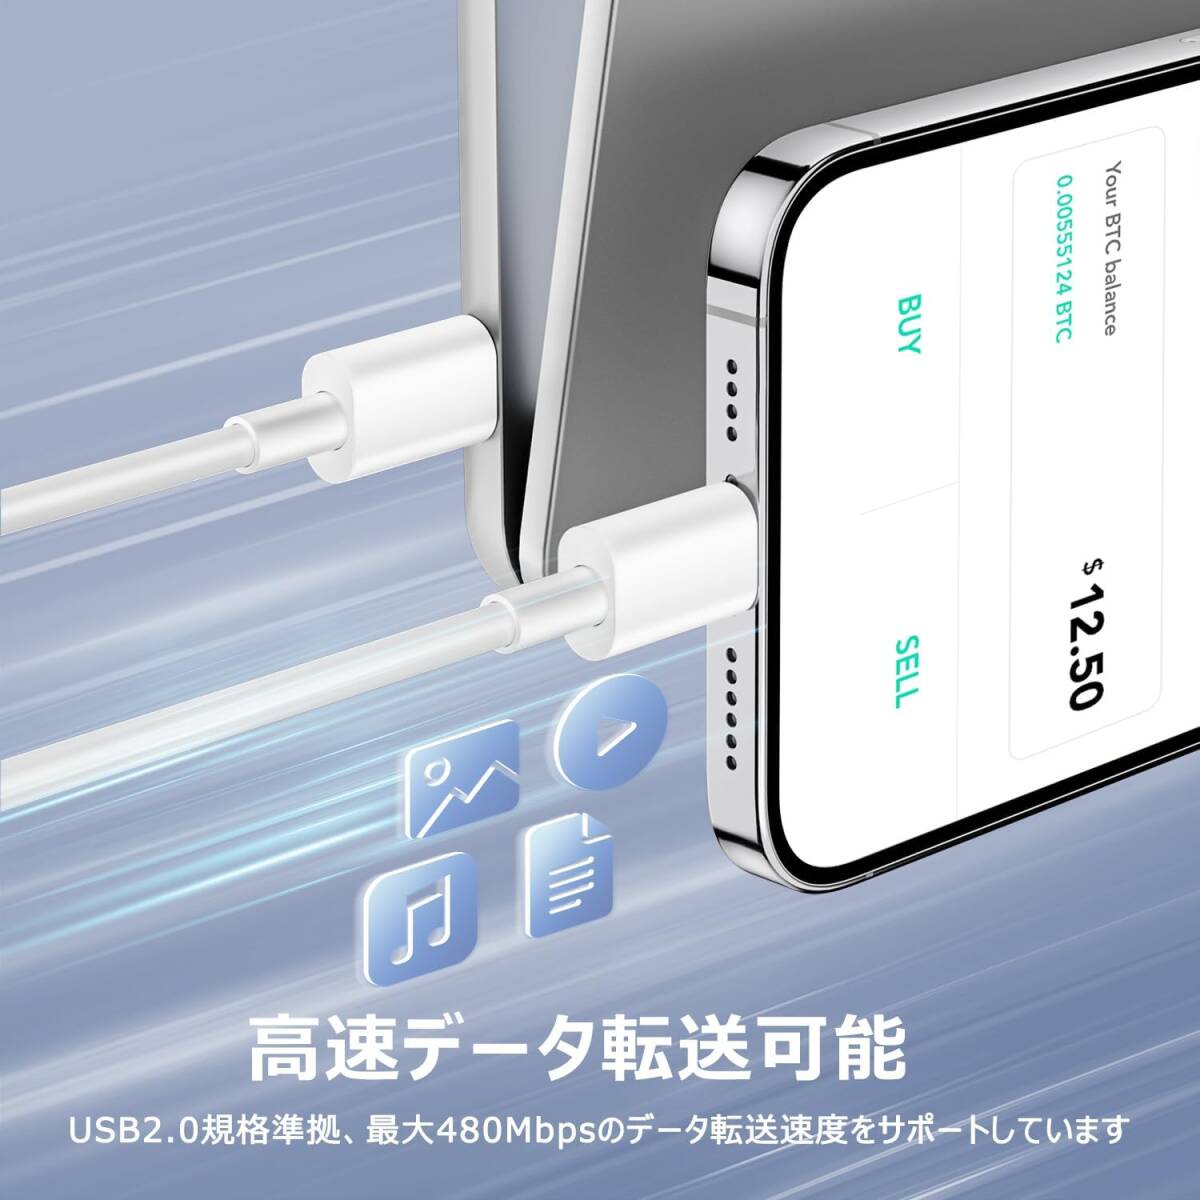 iPhone 充電器 20W USB C PD iPhone急速充電器 [Apple MFi&PSE認定] 2M-USB C Lightningケーブル付き タイプC アイフォン 急速充電